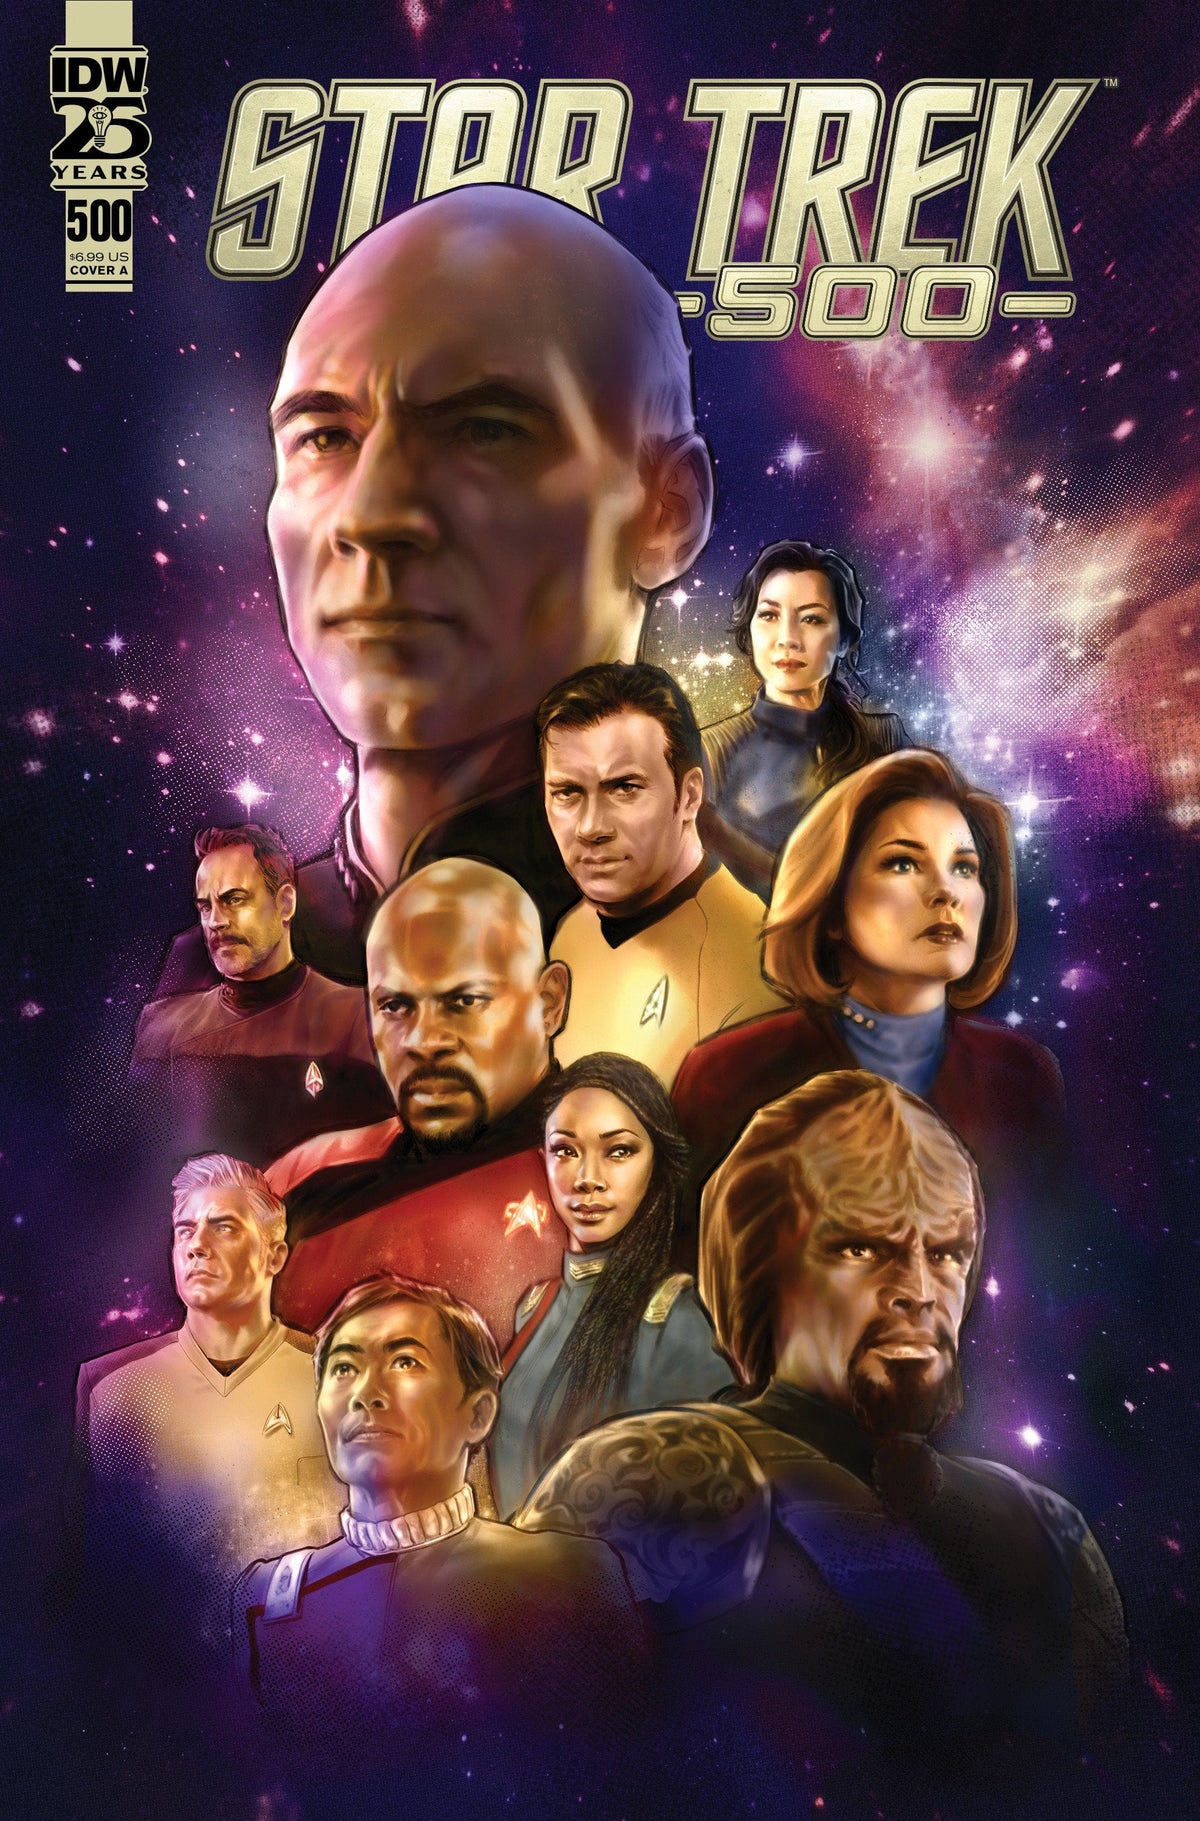 Star Trek #500 Cover A (Jones)